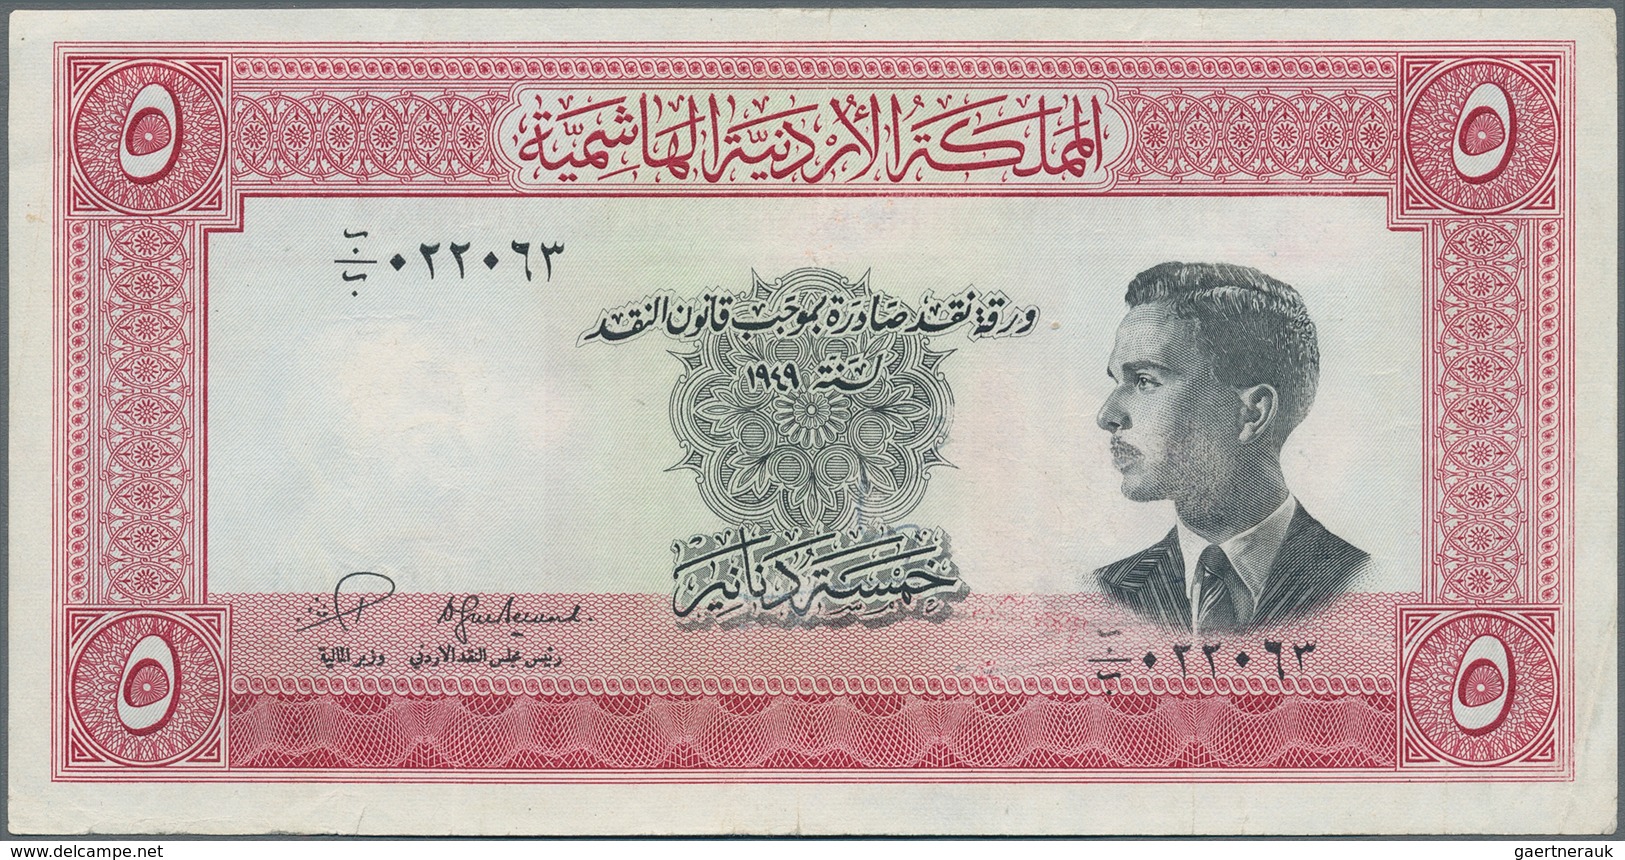 Jordan / Jordanien: 5 Dinars L.1949 (1952), P.7, Still Crisp Paper And Bright Colors With A Few Fold - Jordanie